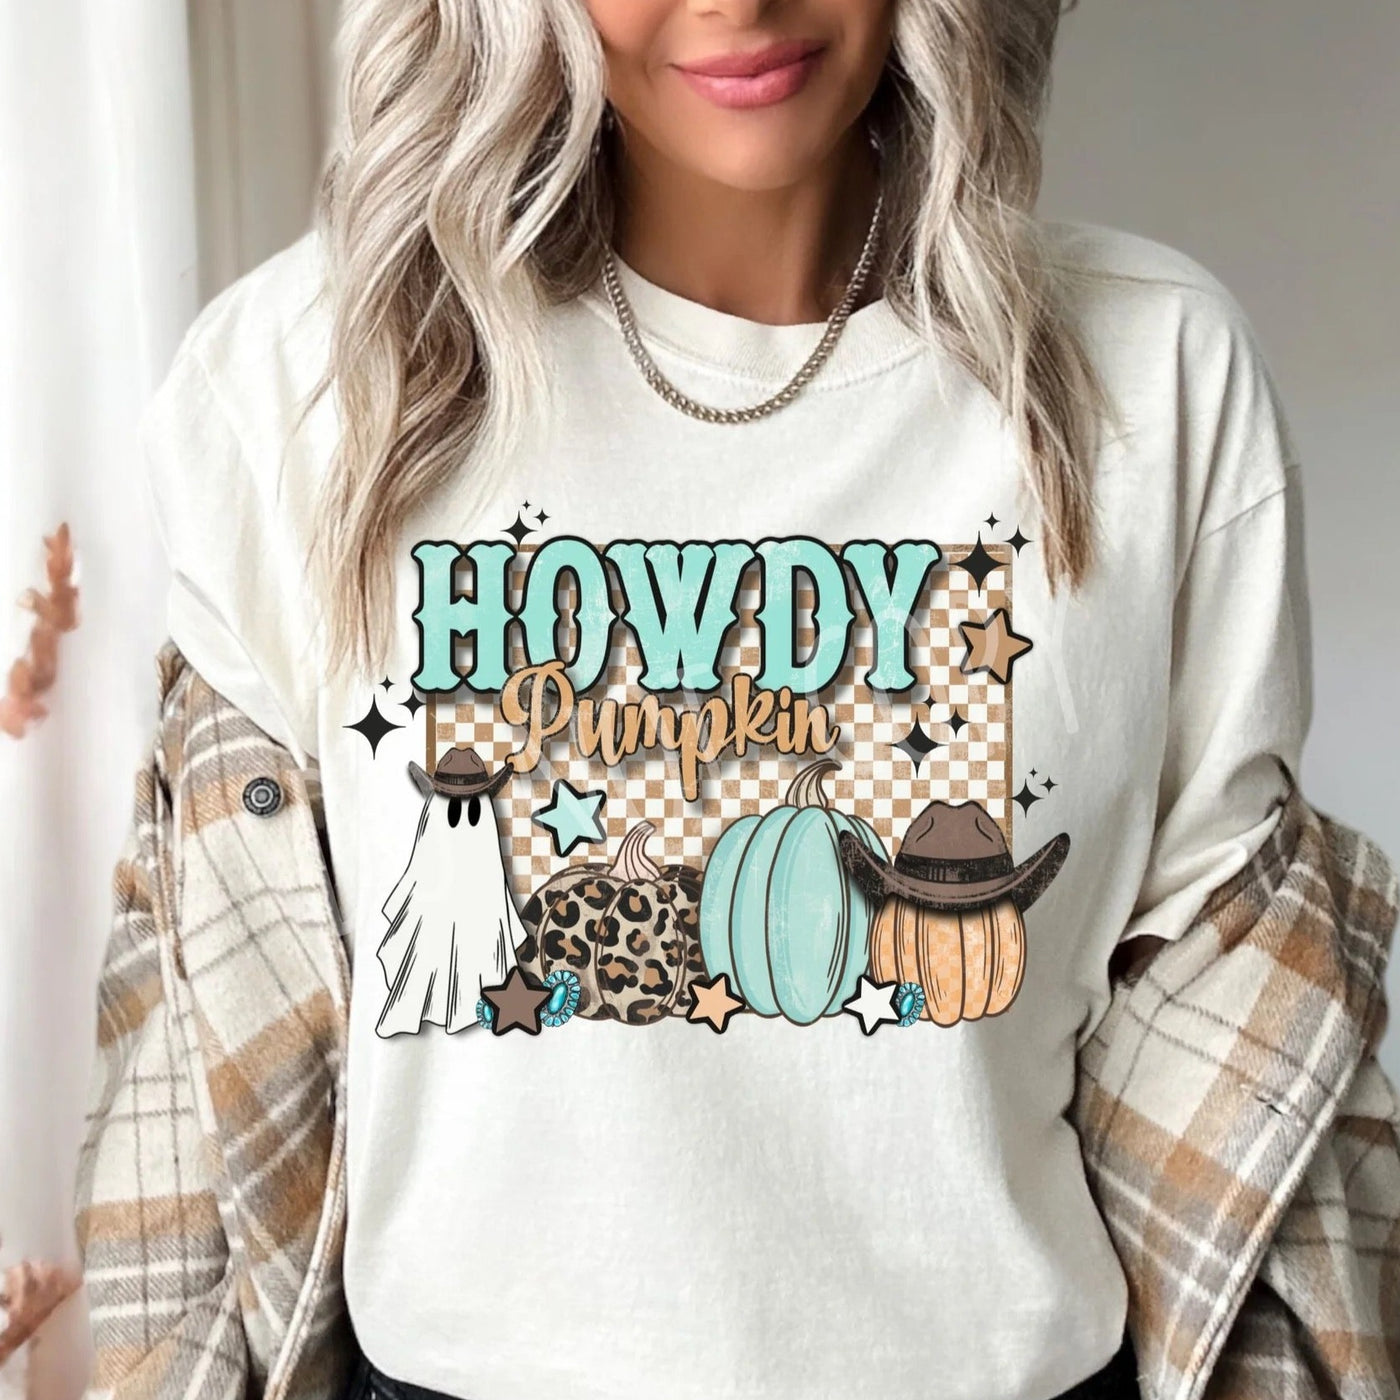 "Howdy Pumpkin" T-shirt (shown on "Vintage White")